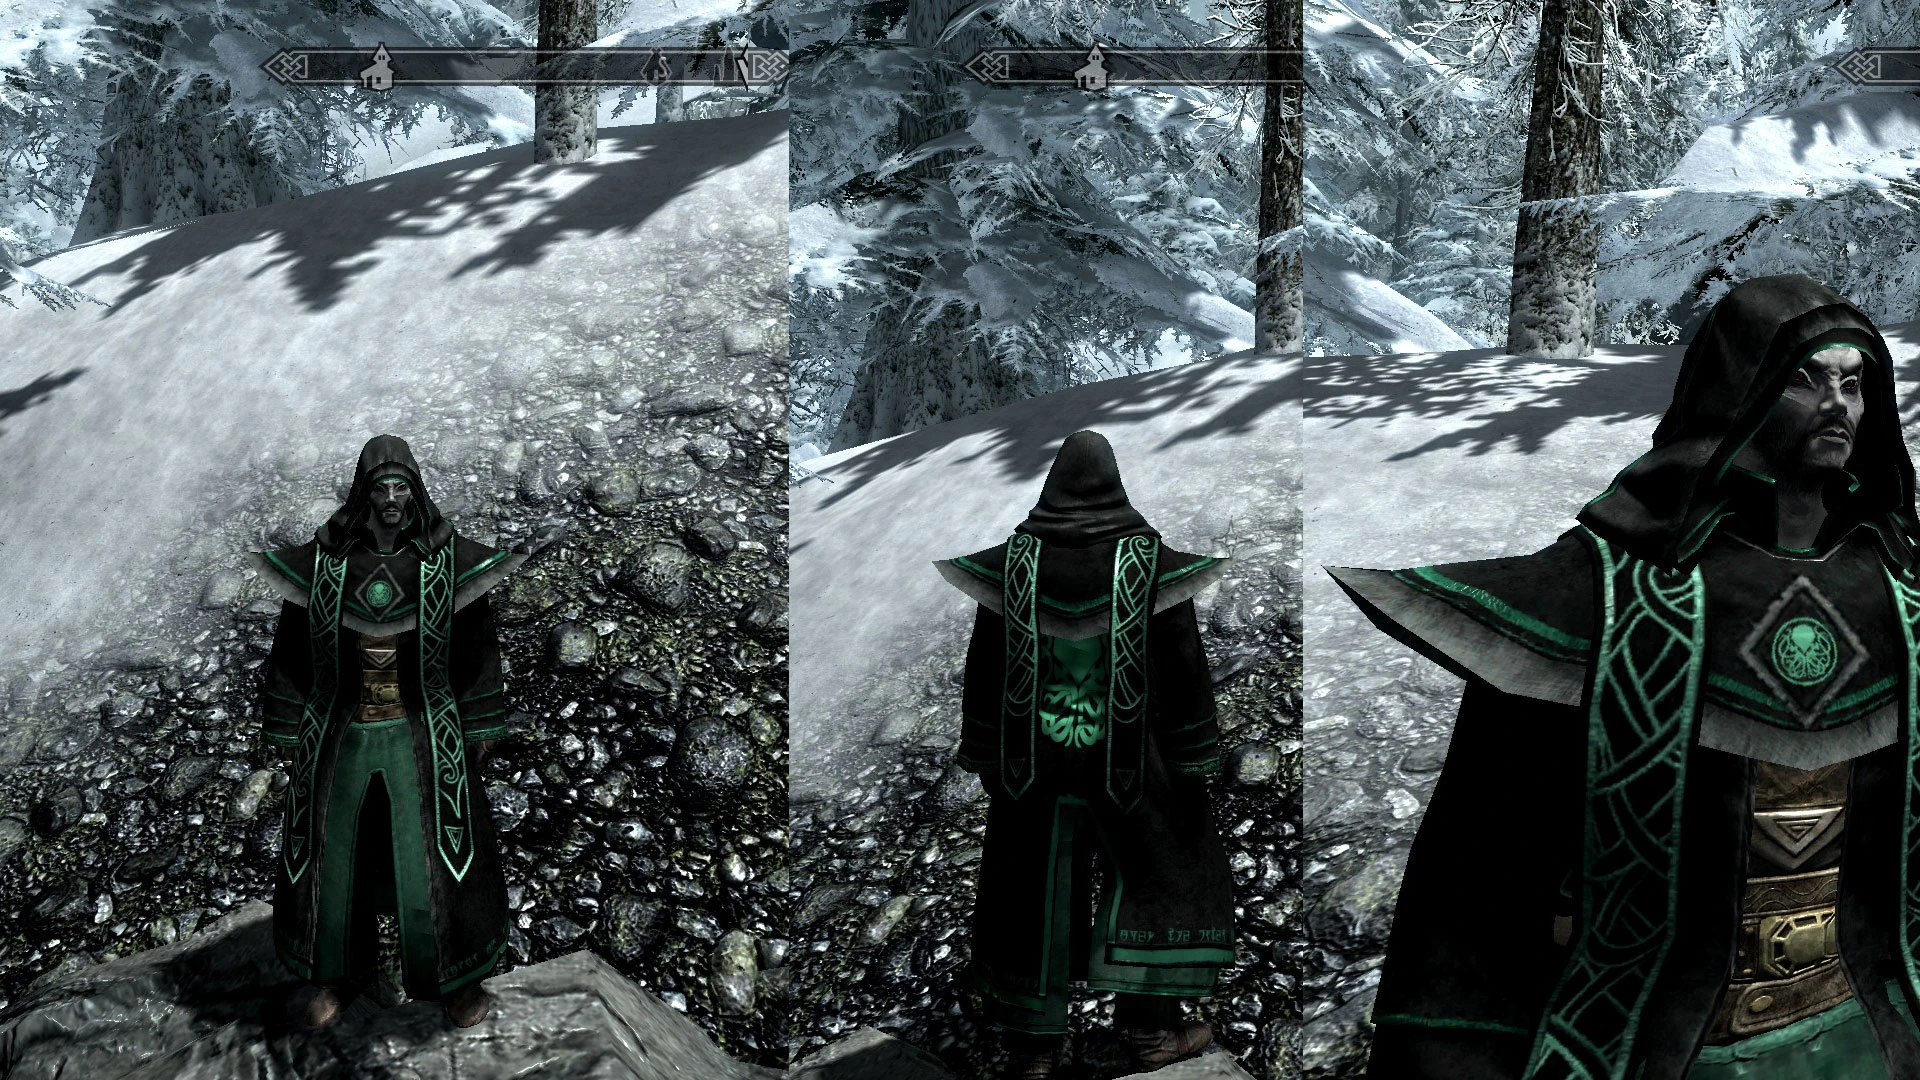 dragon priest robes wip at skyrim nexus mods and community.